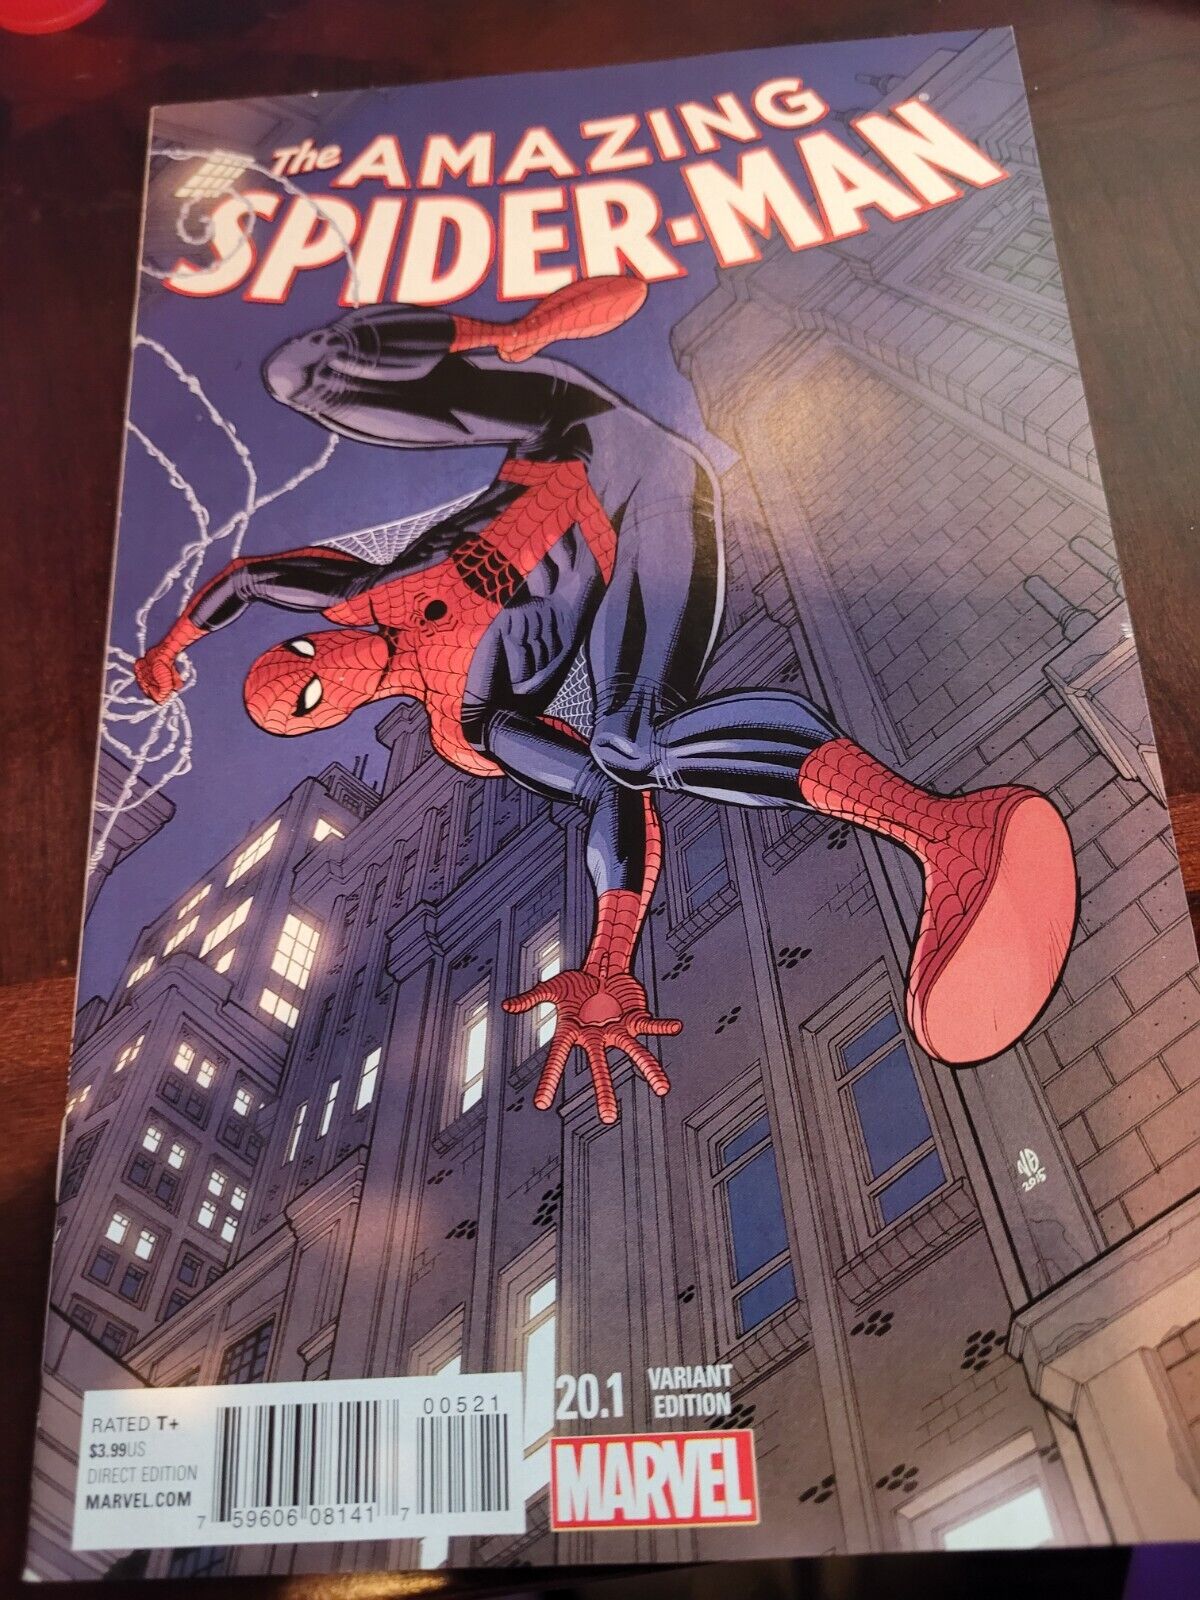 The Amazing Spider-Man #20.1 (Marvel Comics October 2015)